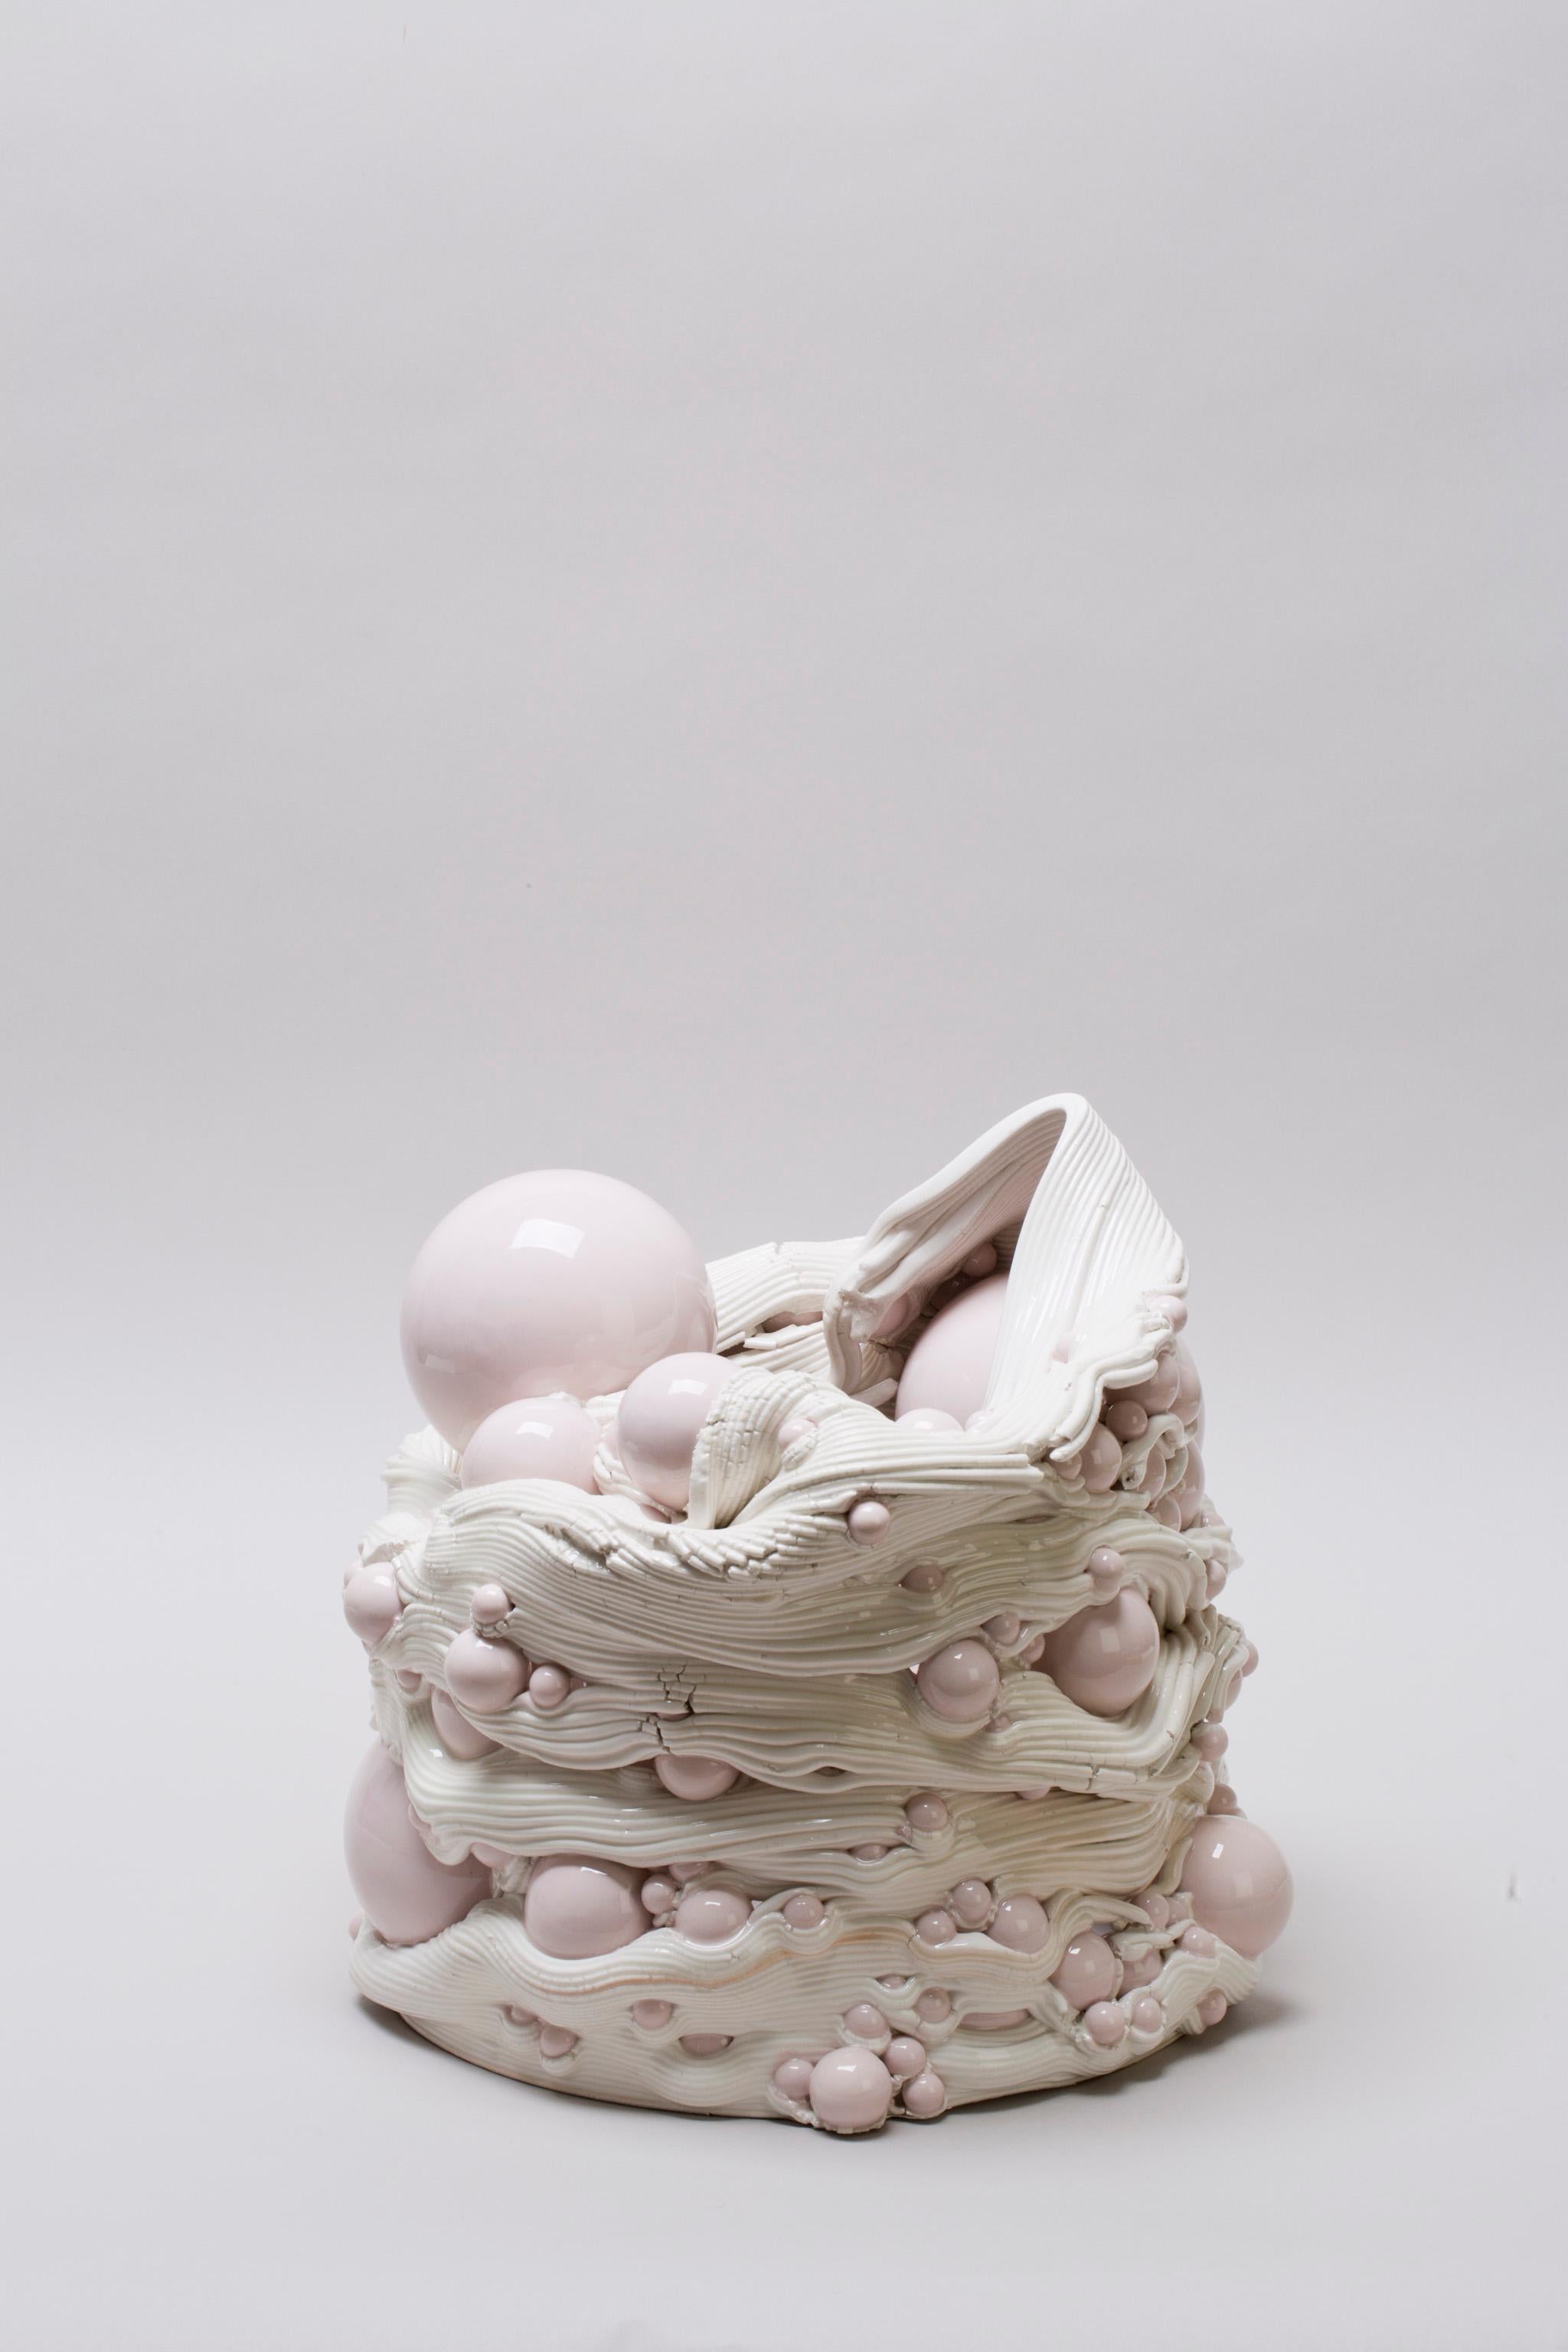 Modern White & Pink Ceramic Sculptural Vase Italian Contemporary, 21st Century 3D Print For Sale